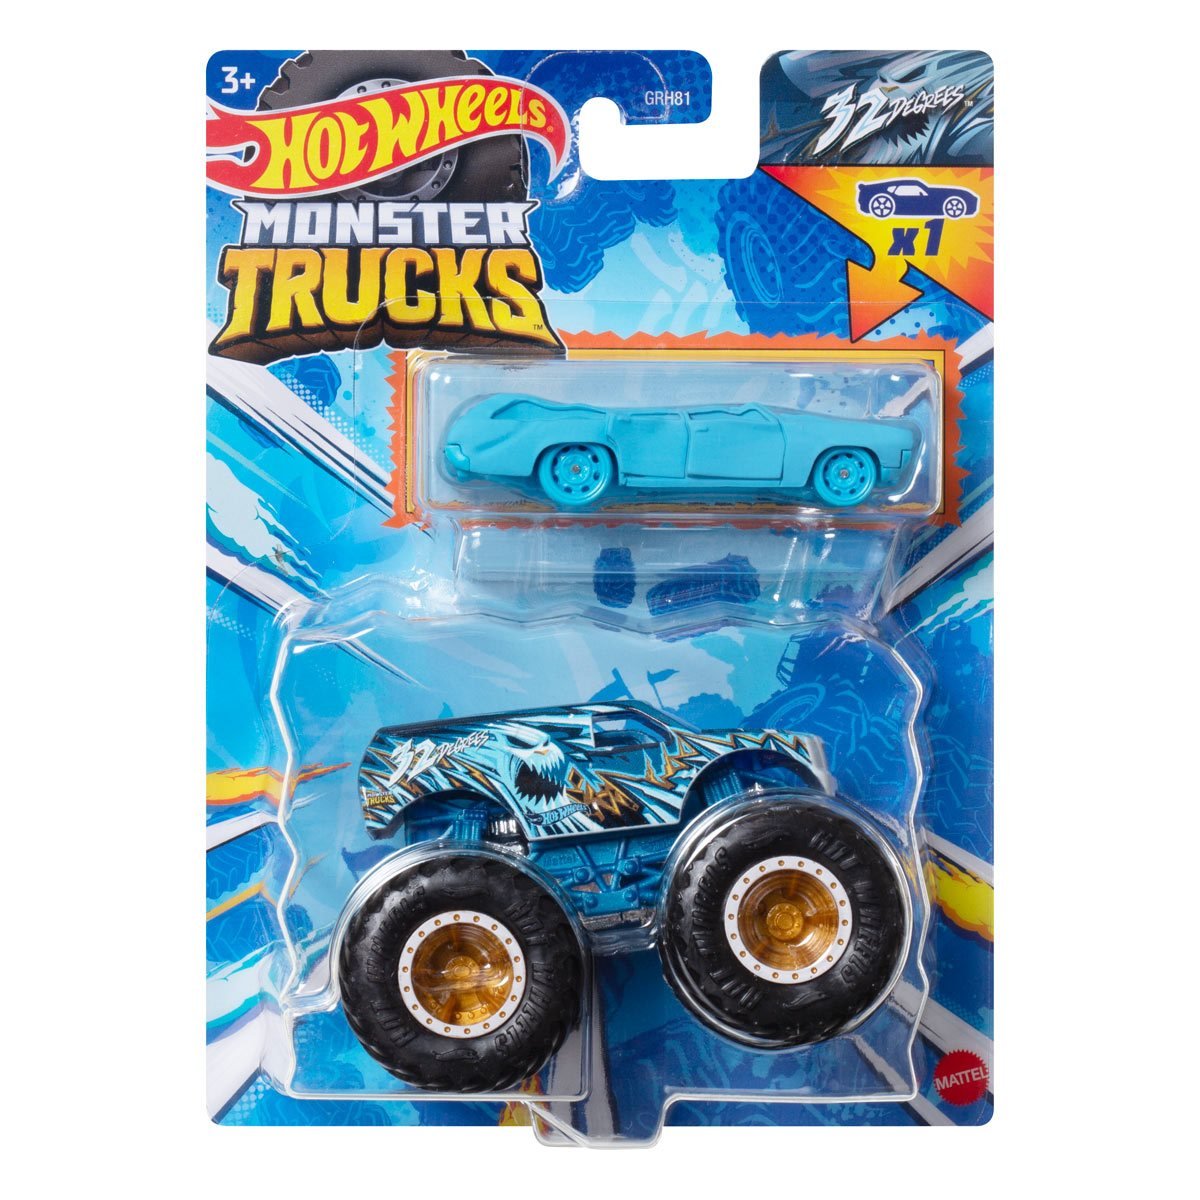 Hot Wheels Monster Trucks Oversized Bigfoot 124 Diecast Car Mattel